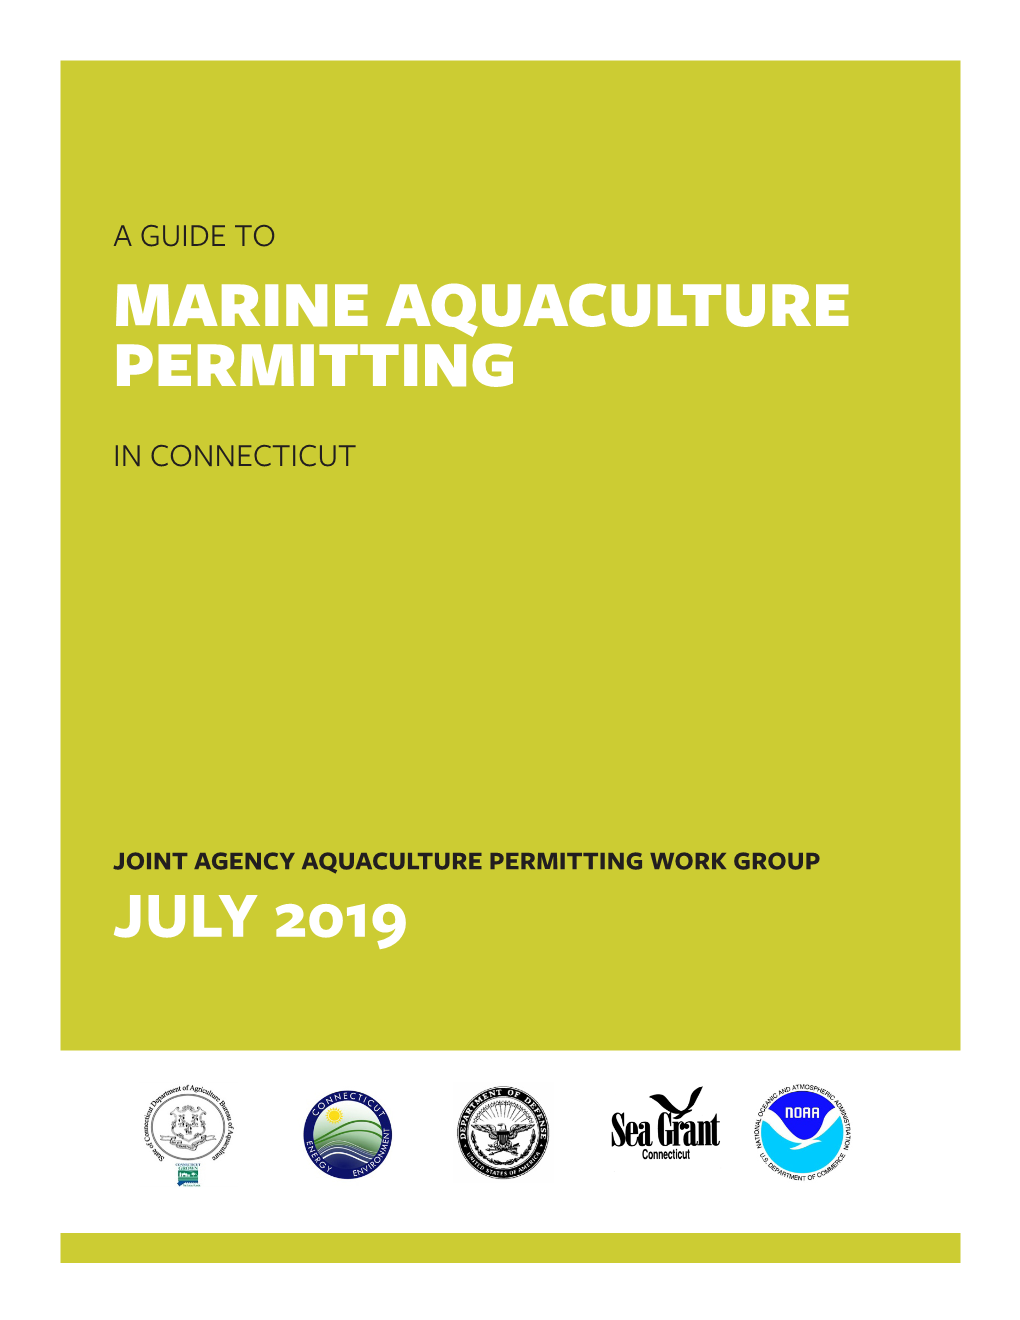 A Guide to Marine Aquaculture Permitting